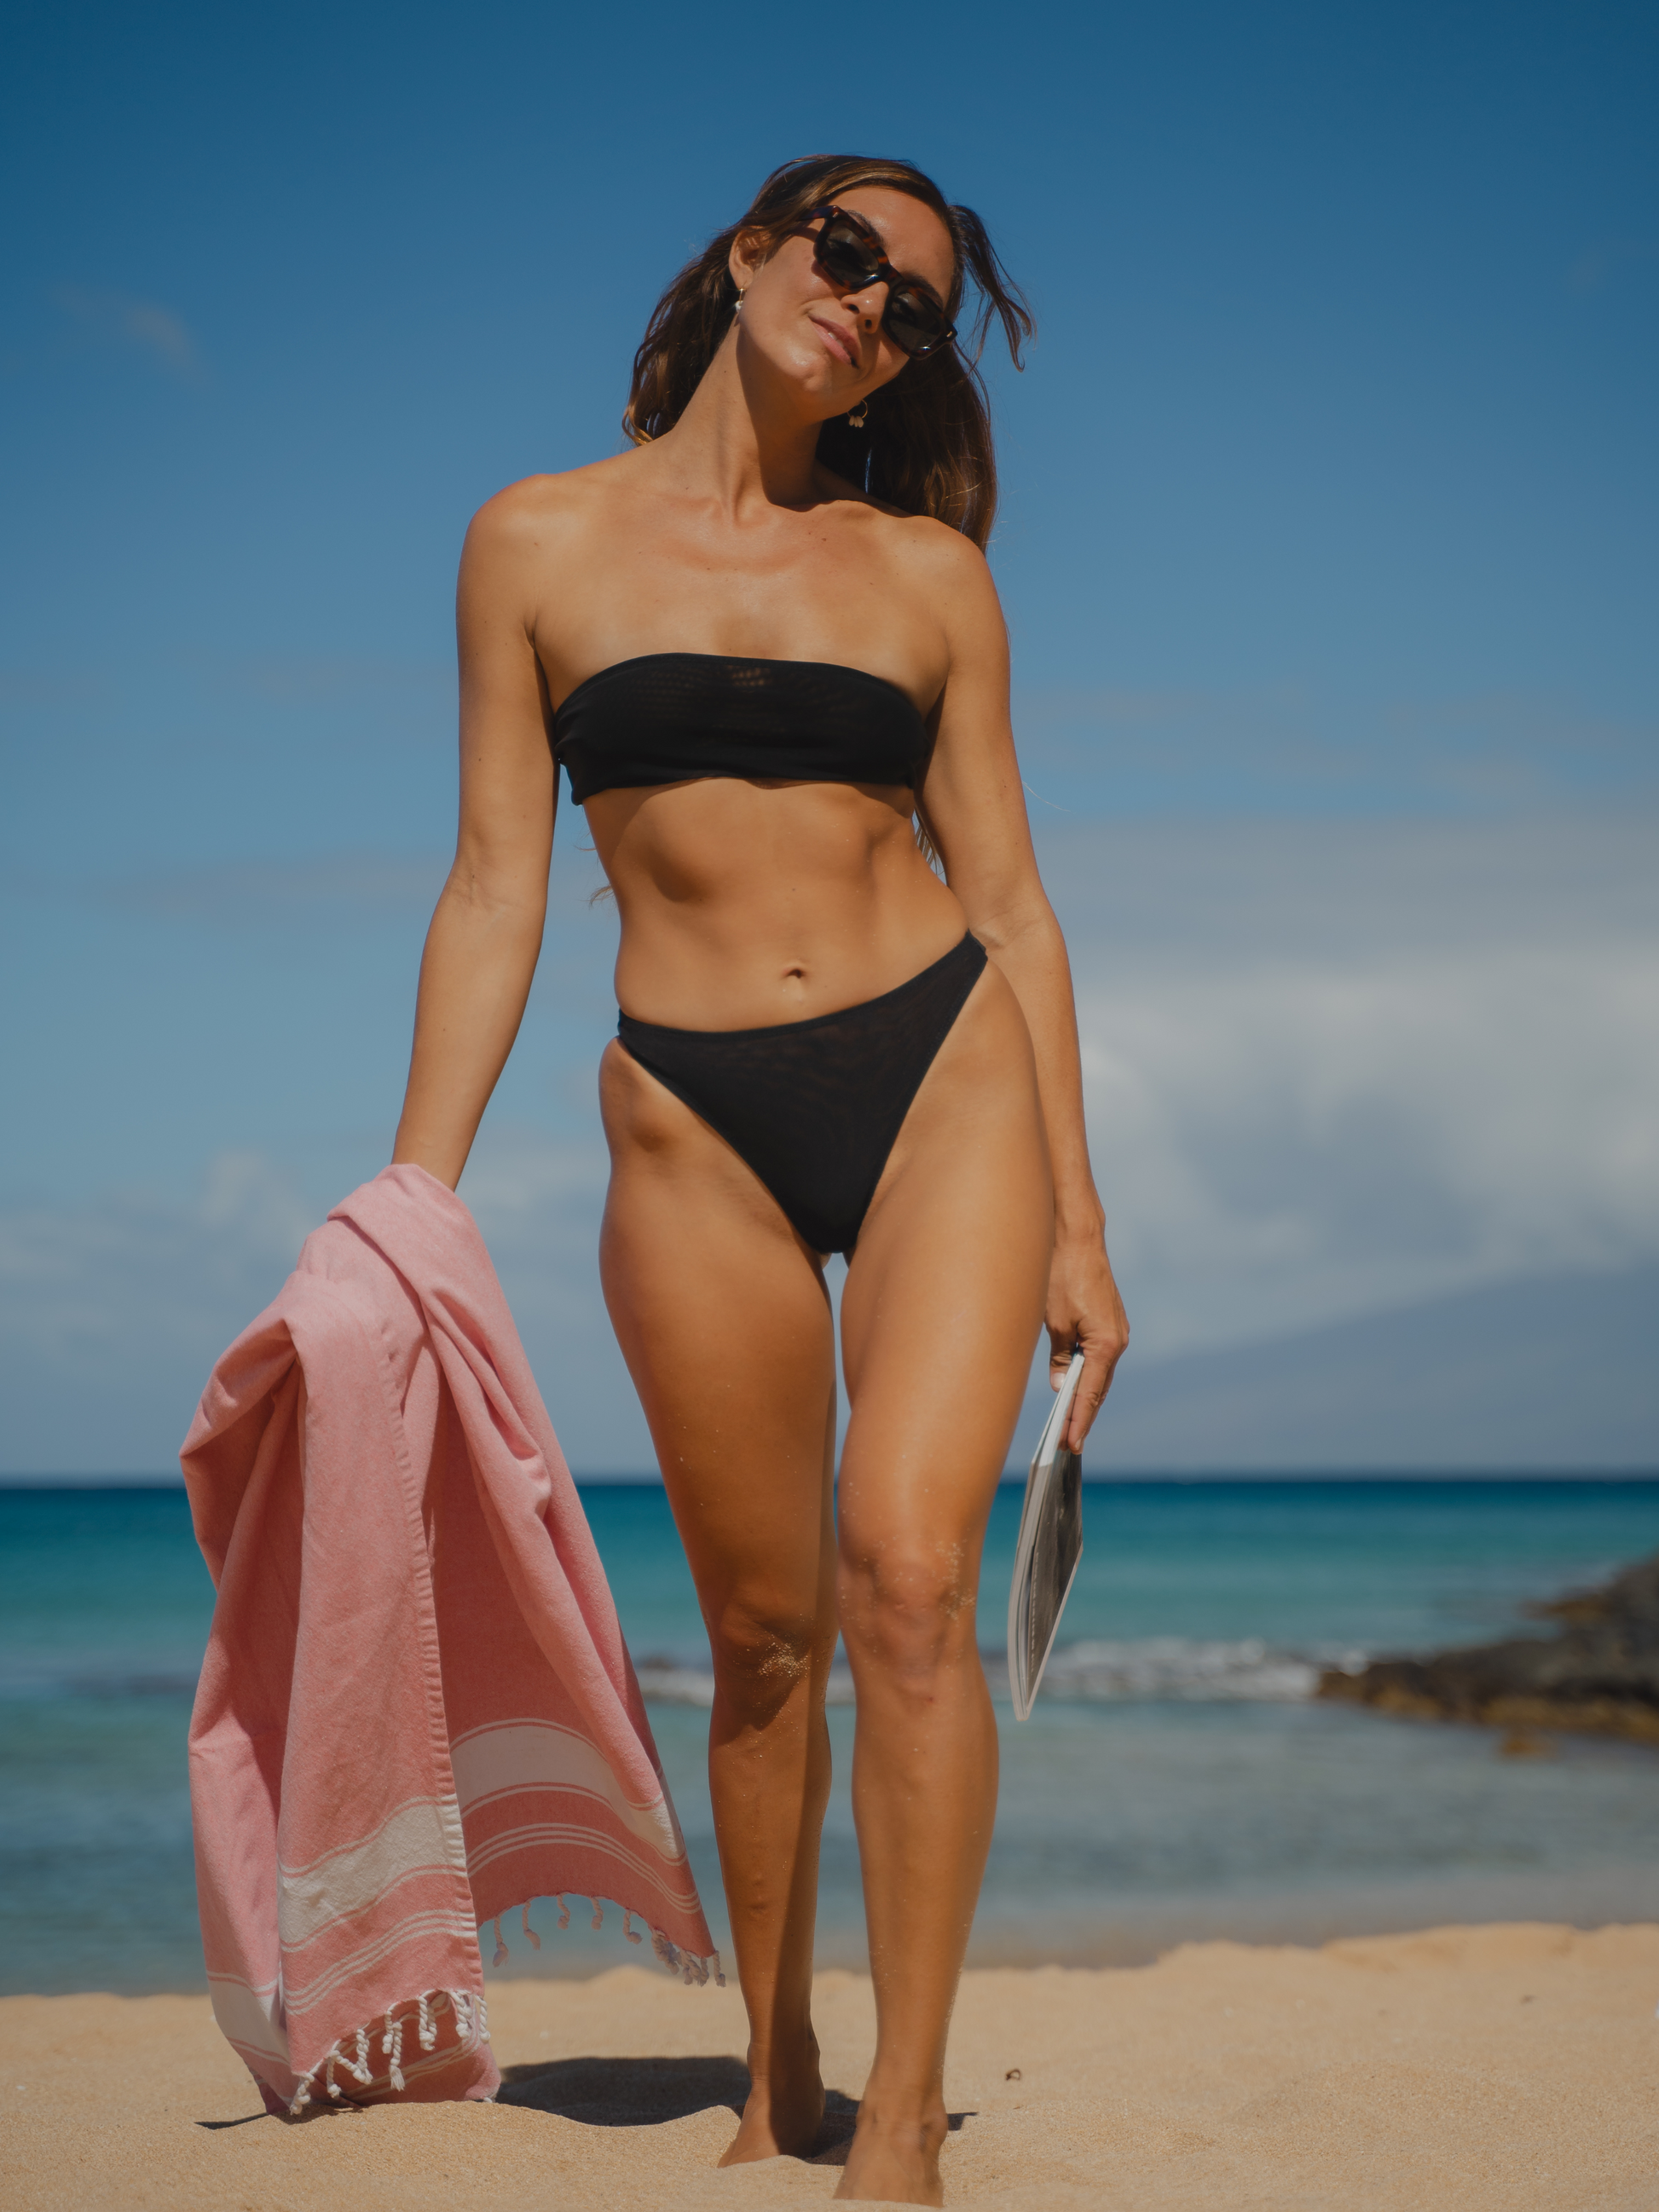 Tan Through Blog - Tan Through Swimwear and Beachwear